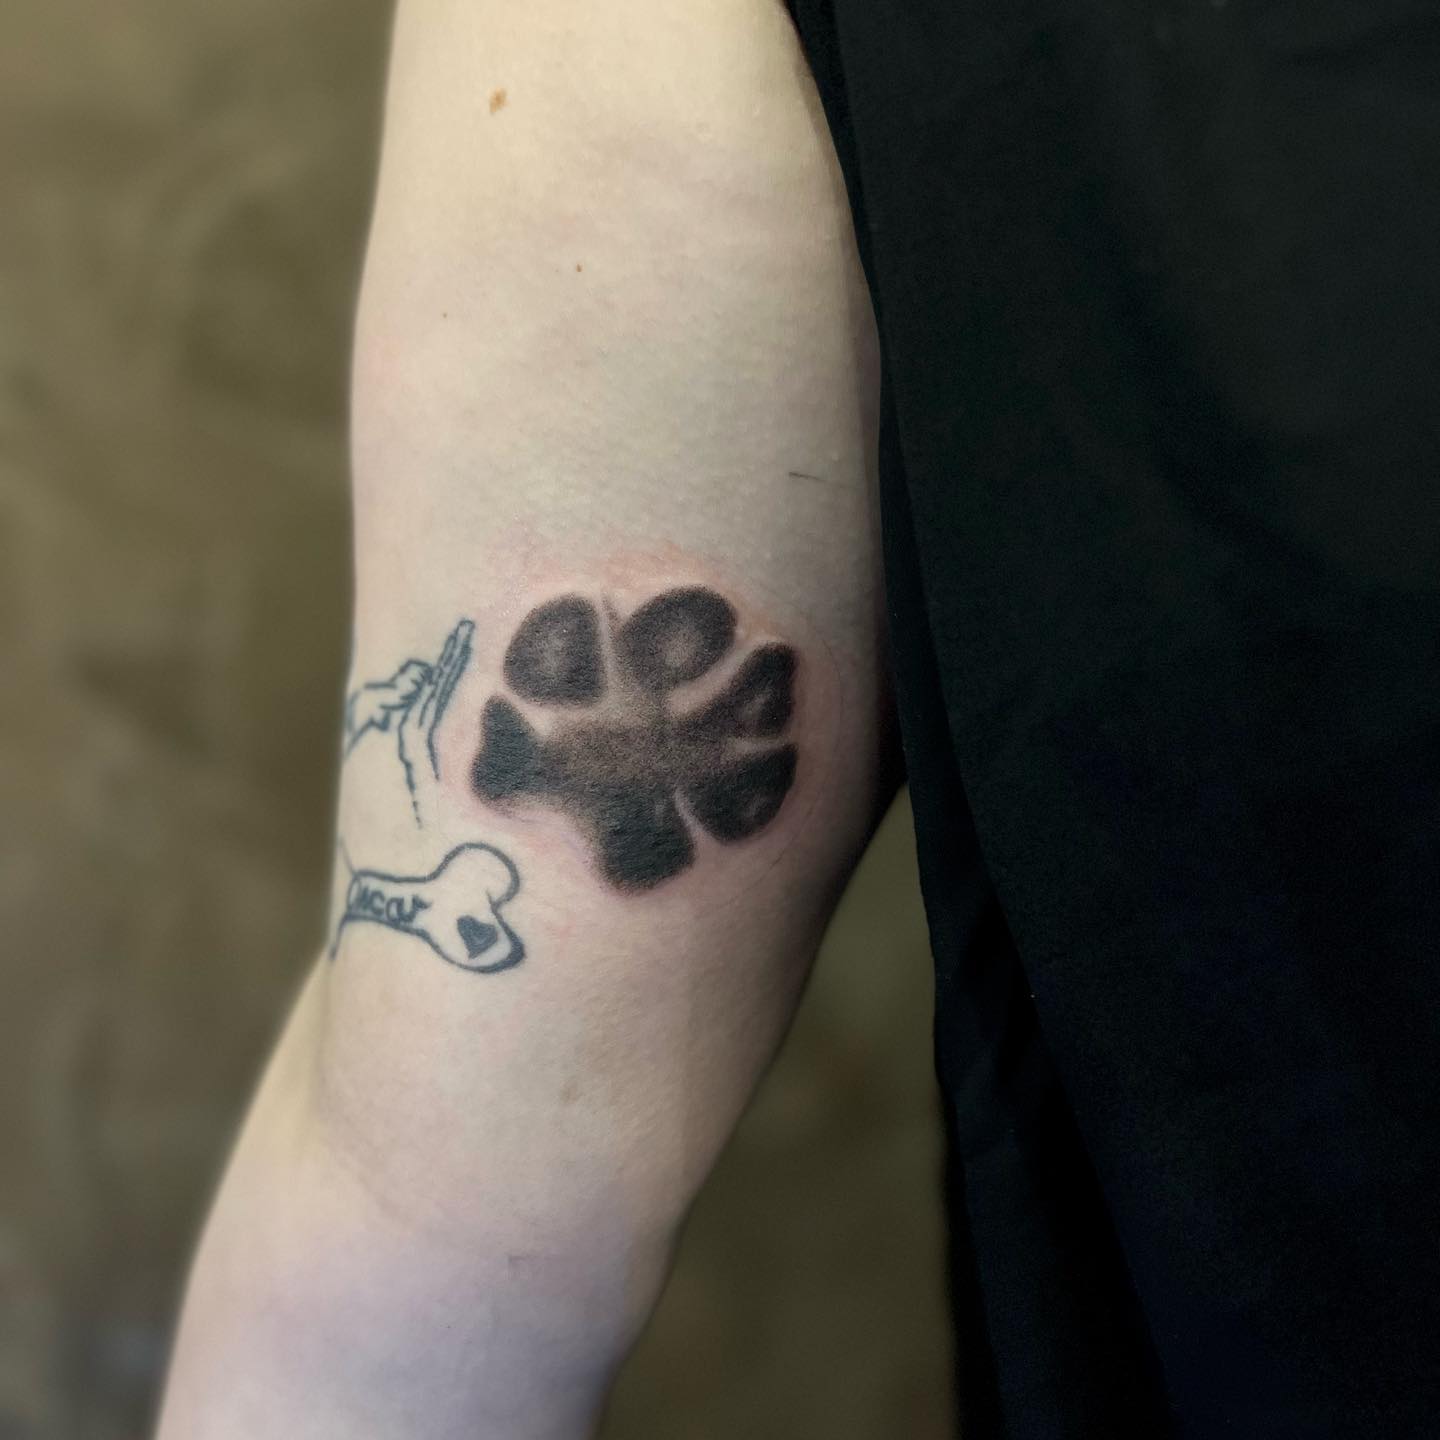 DANKE @nanyihrs 
.
#tattoo #hundepfote #pfote #doglove #dogmom #hundetattoo #tat